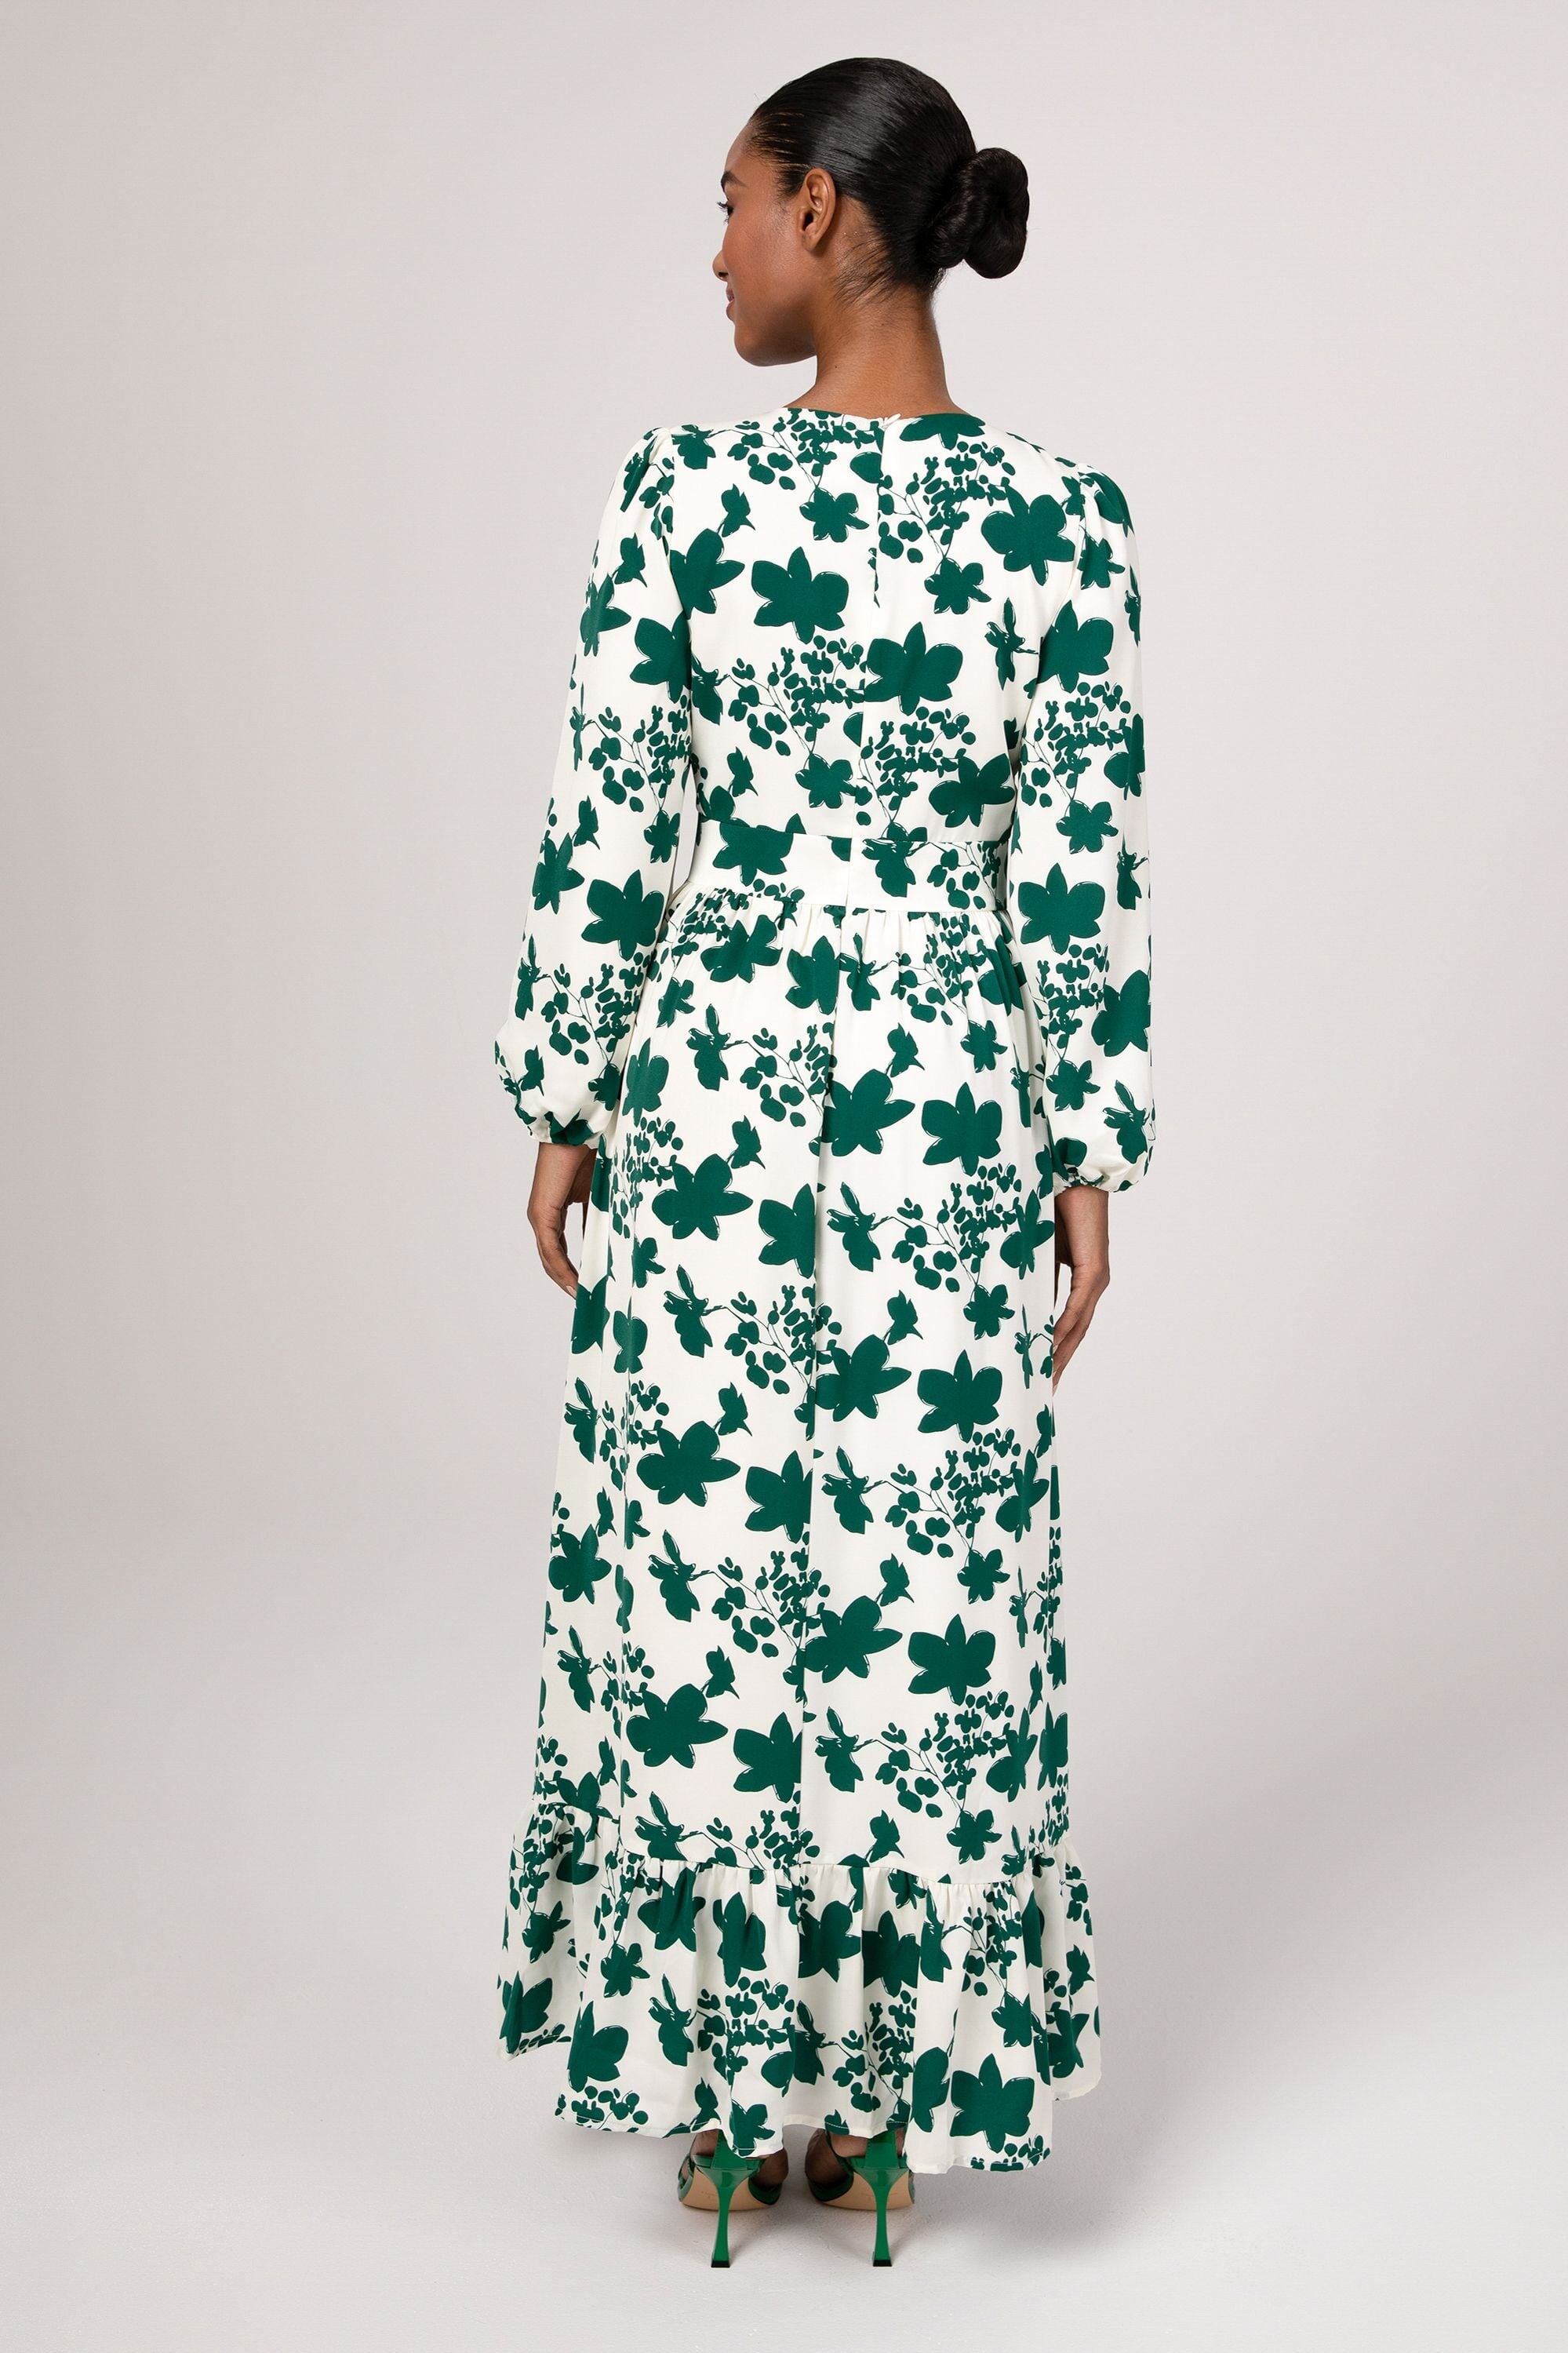 Farida Green Floral Maxi Dress Veiled Collection 